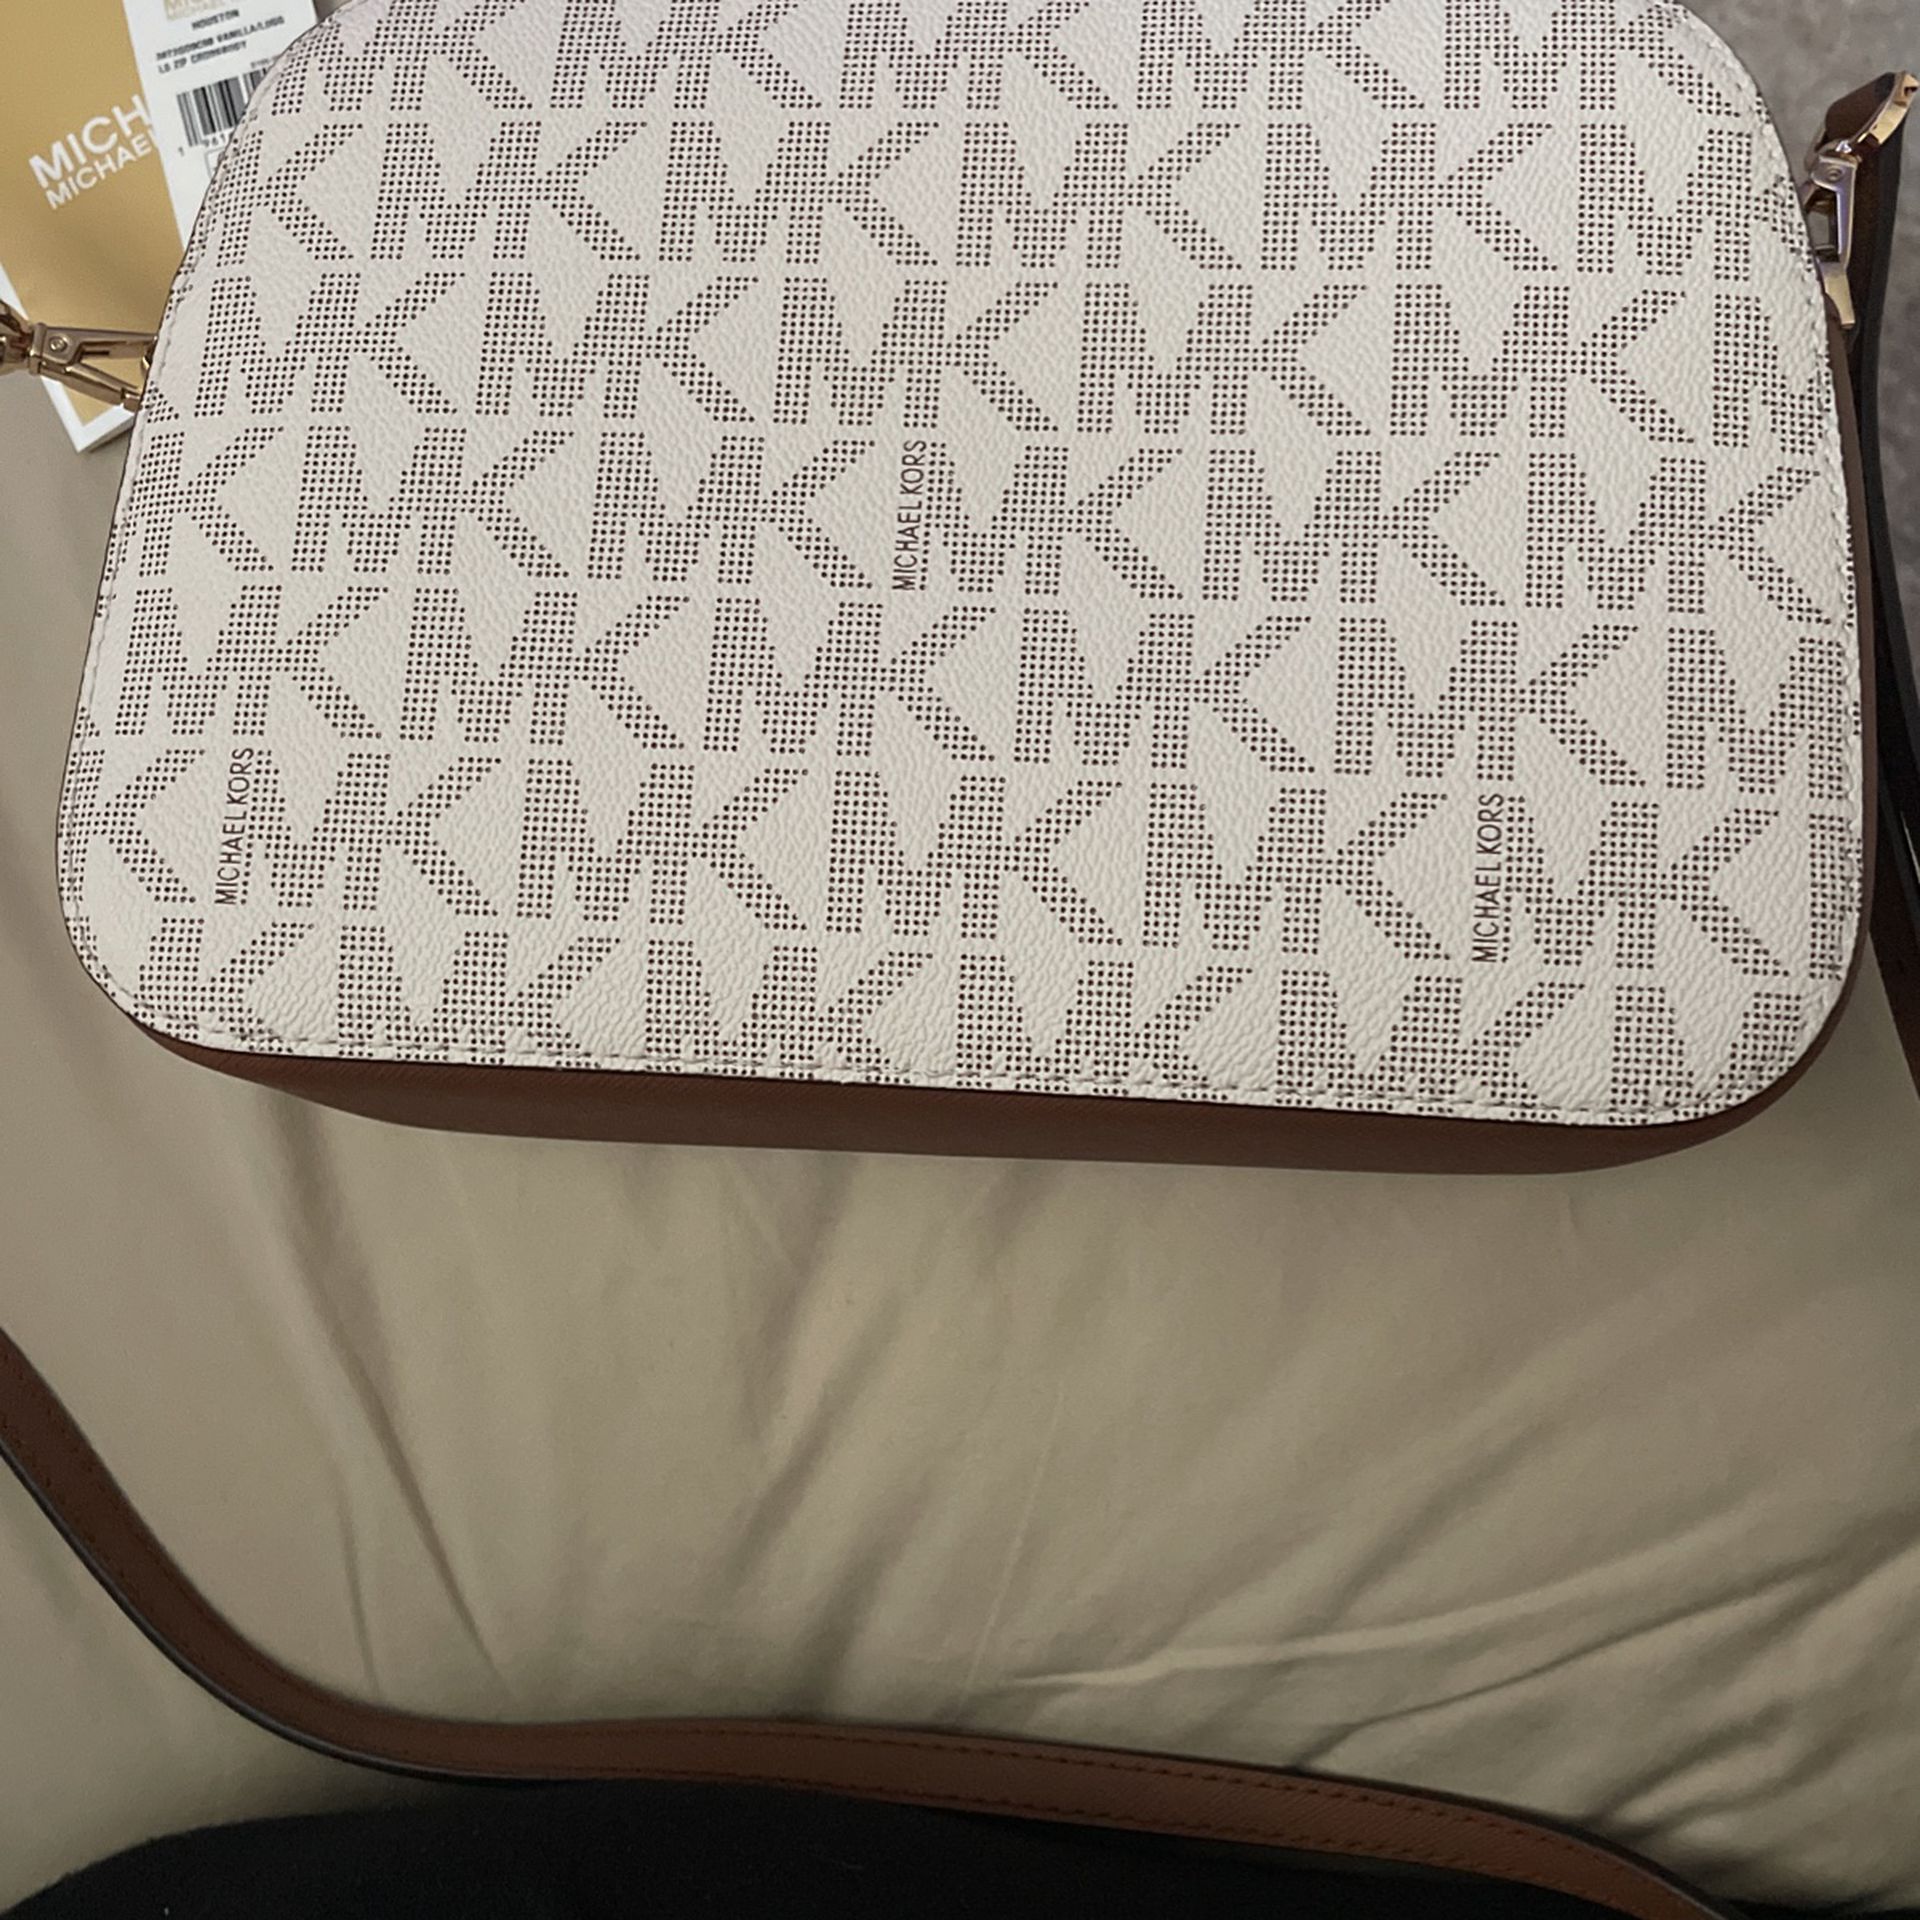 Michael Kors Handbag for Sale in Diamond Bar, CA - OfferUp